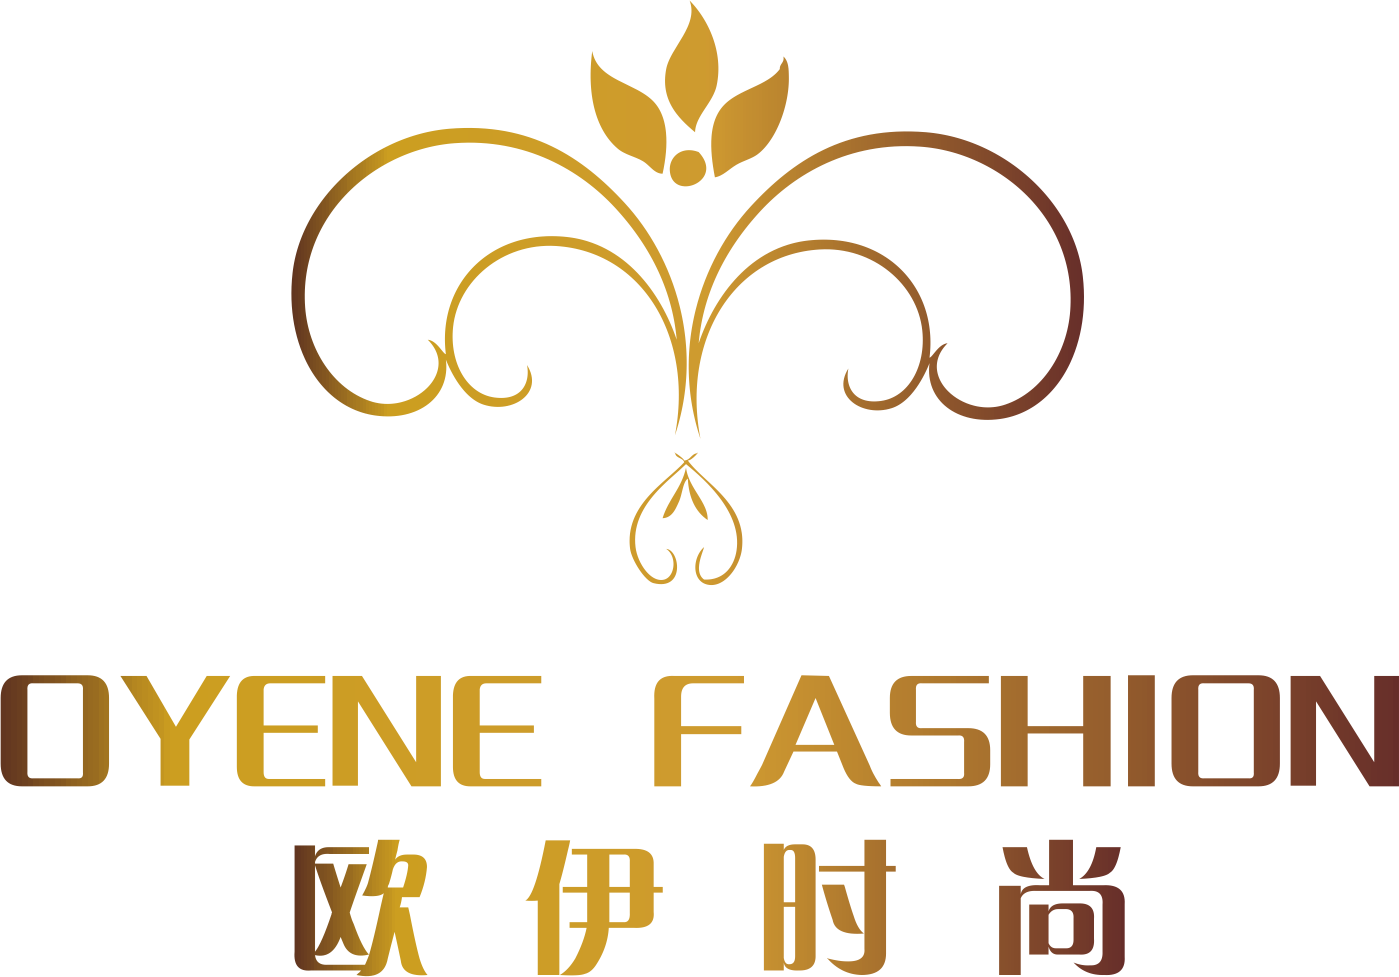 Oyene Fashion Company Limited logo